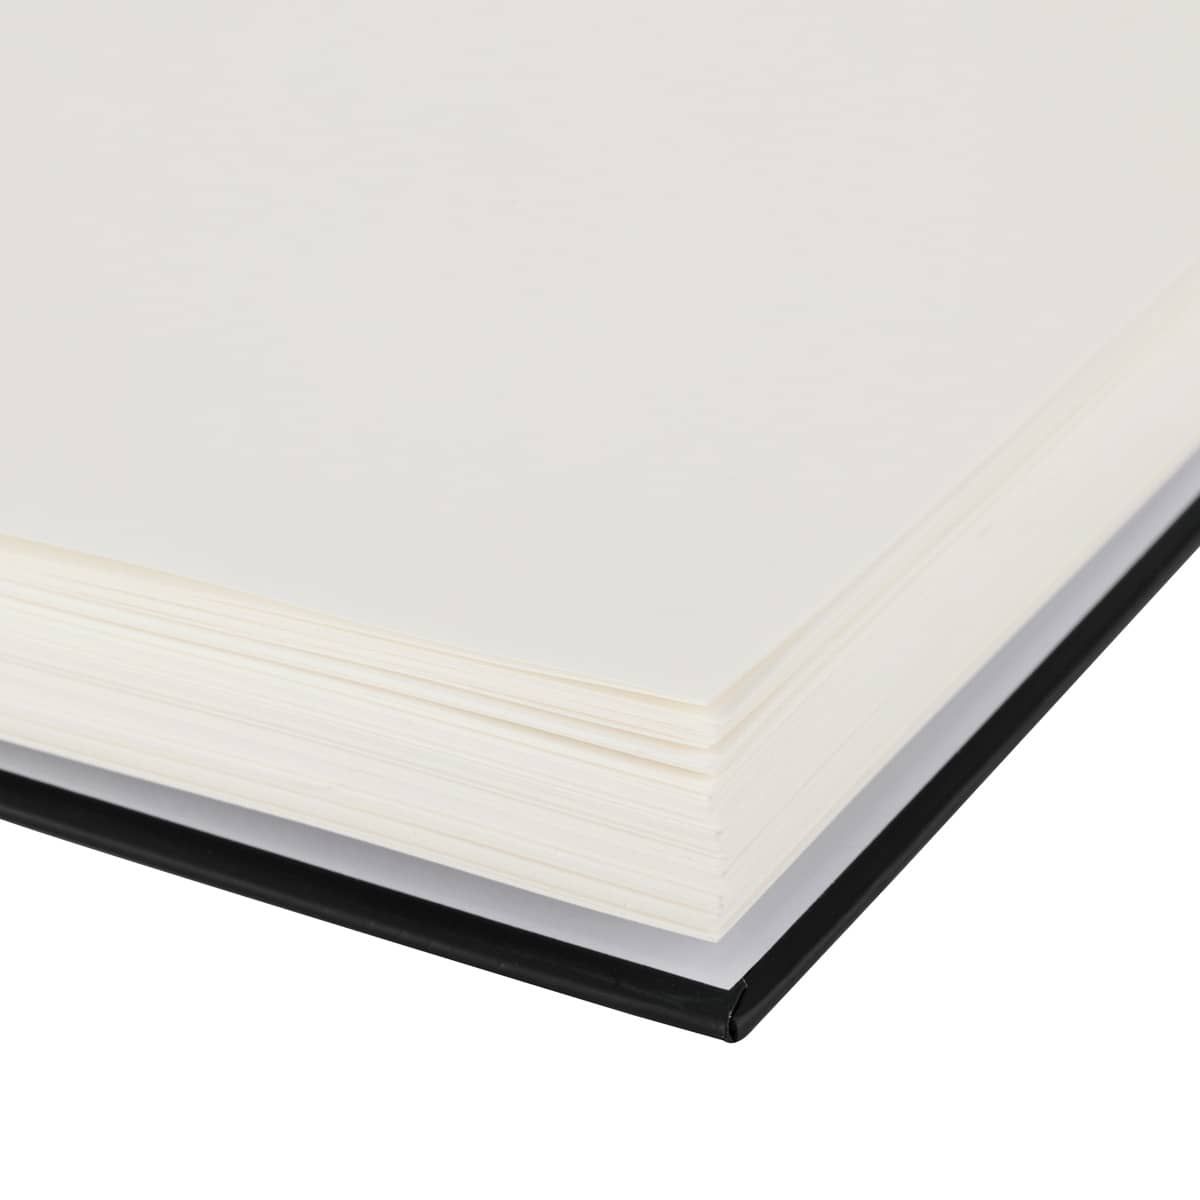 Soft White 75 lb. (110gsm) paper